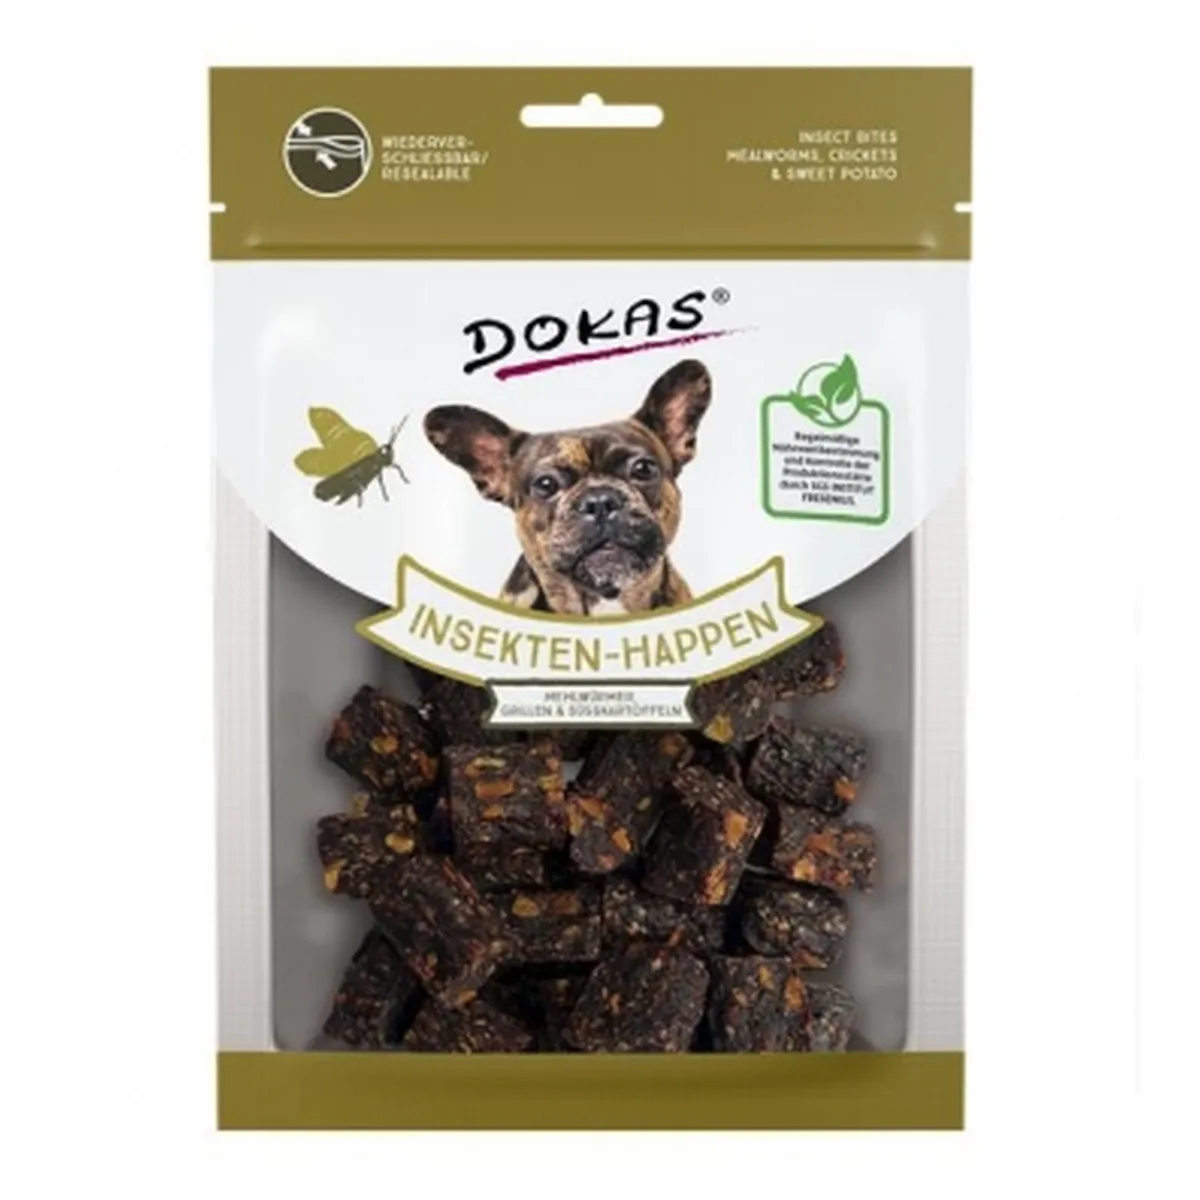 Dokas Dog Snack Insekten-Happen Mehlwürmer, Grillen, Süßkartoffel 100 g